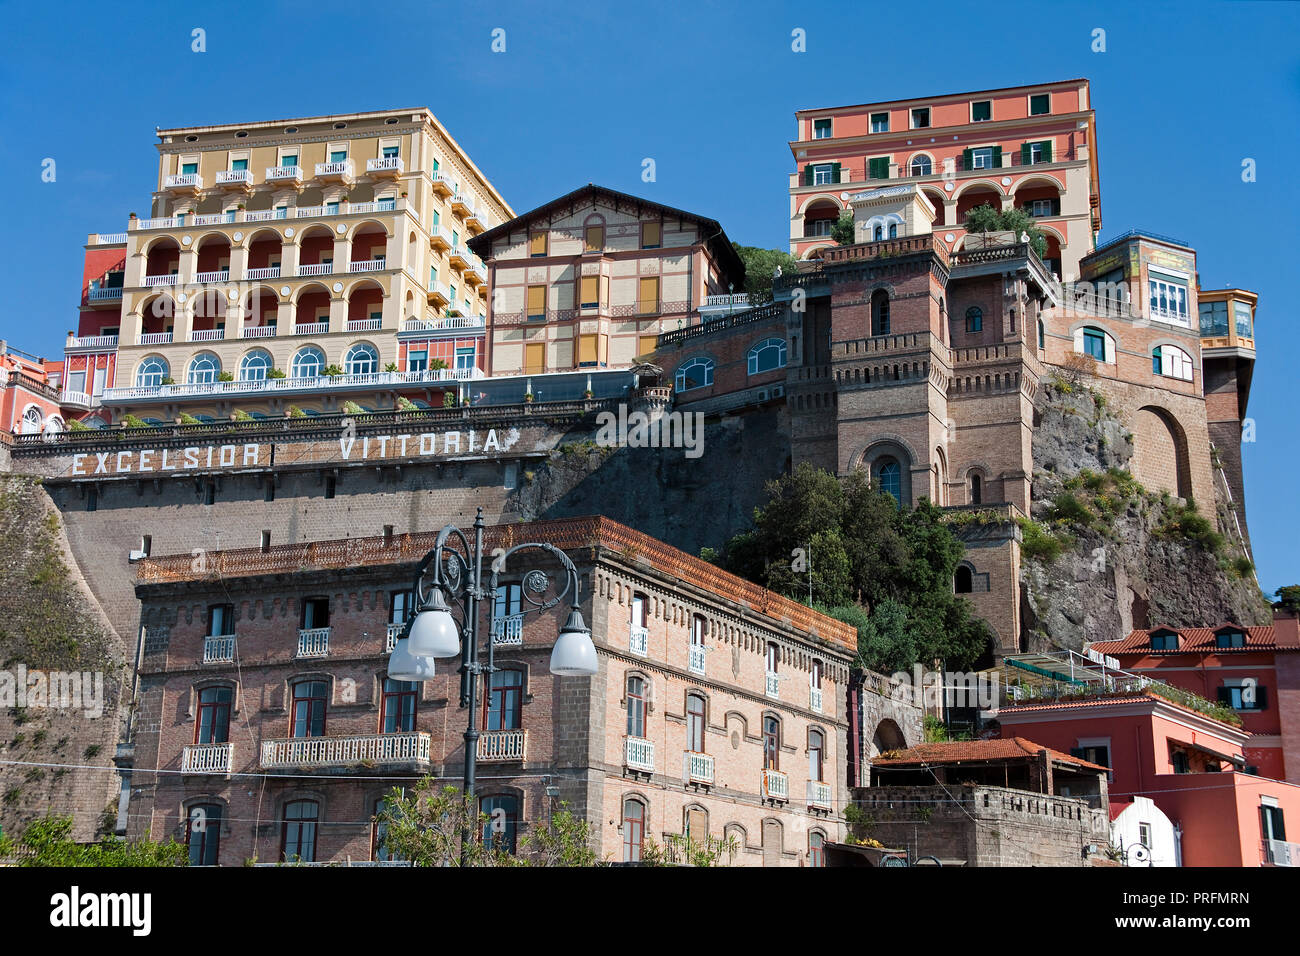 Hotel Excelsior Vittoria on the cliff, Sorrento, Peninsula of Sorrento, Gulf of Naples, Campania, Italy Stock Photo